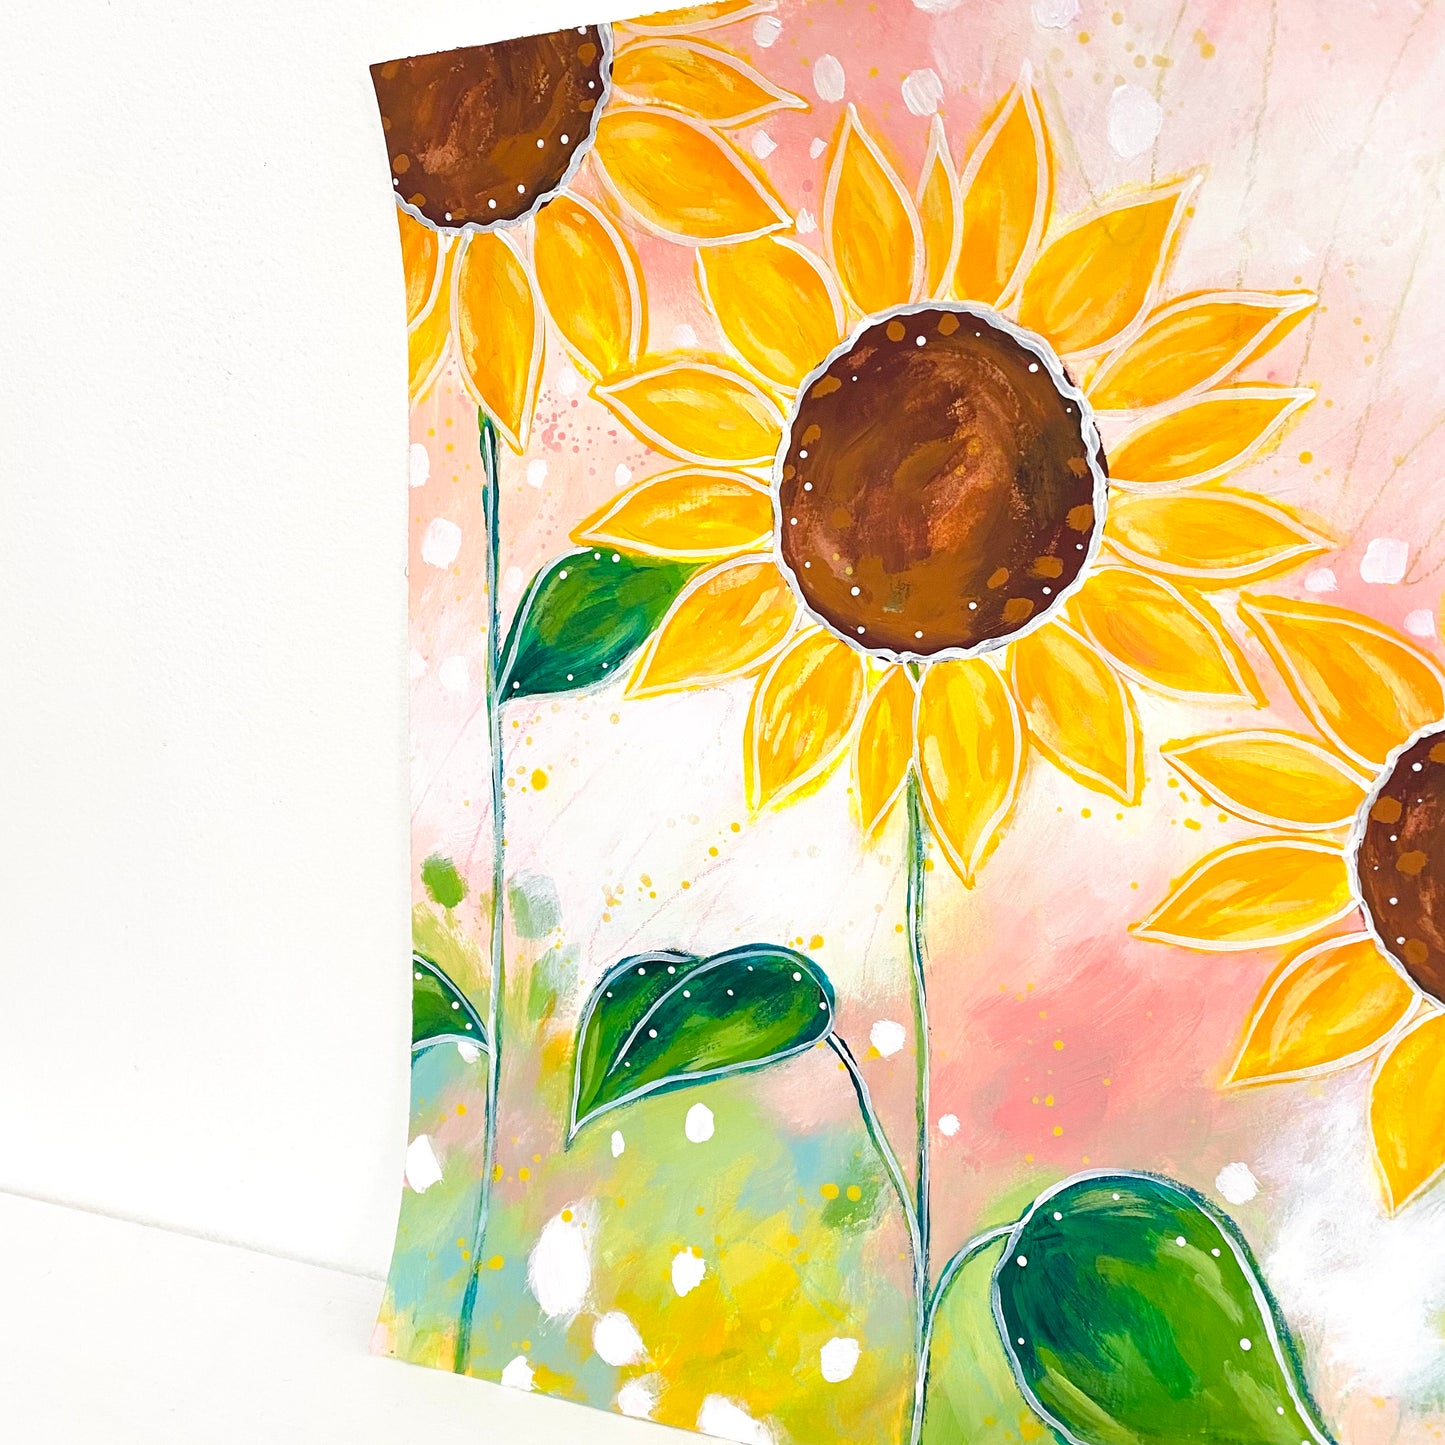 February Flowers Day 2 Sunflowers 8.5x11 inch original painting